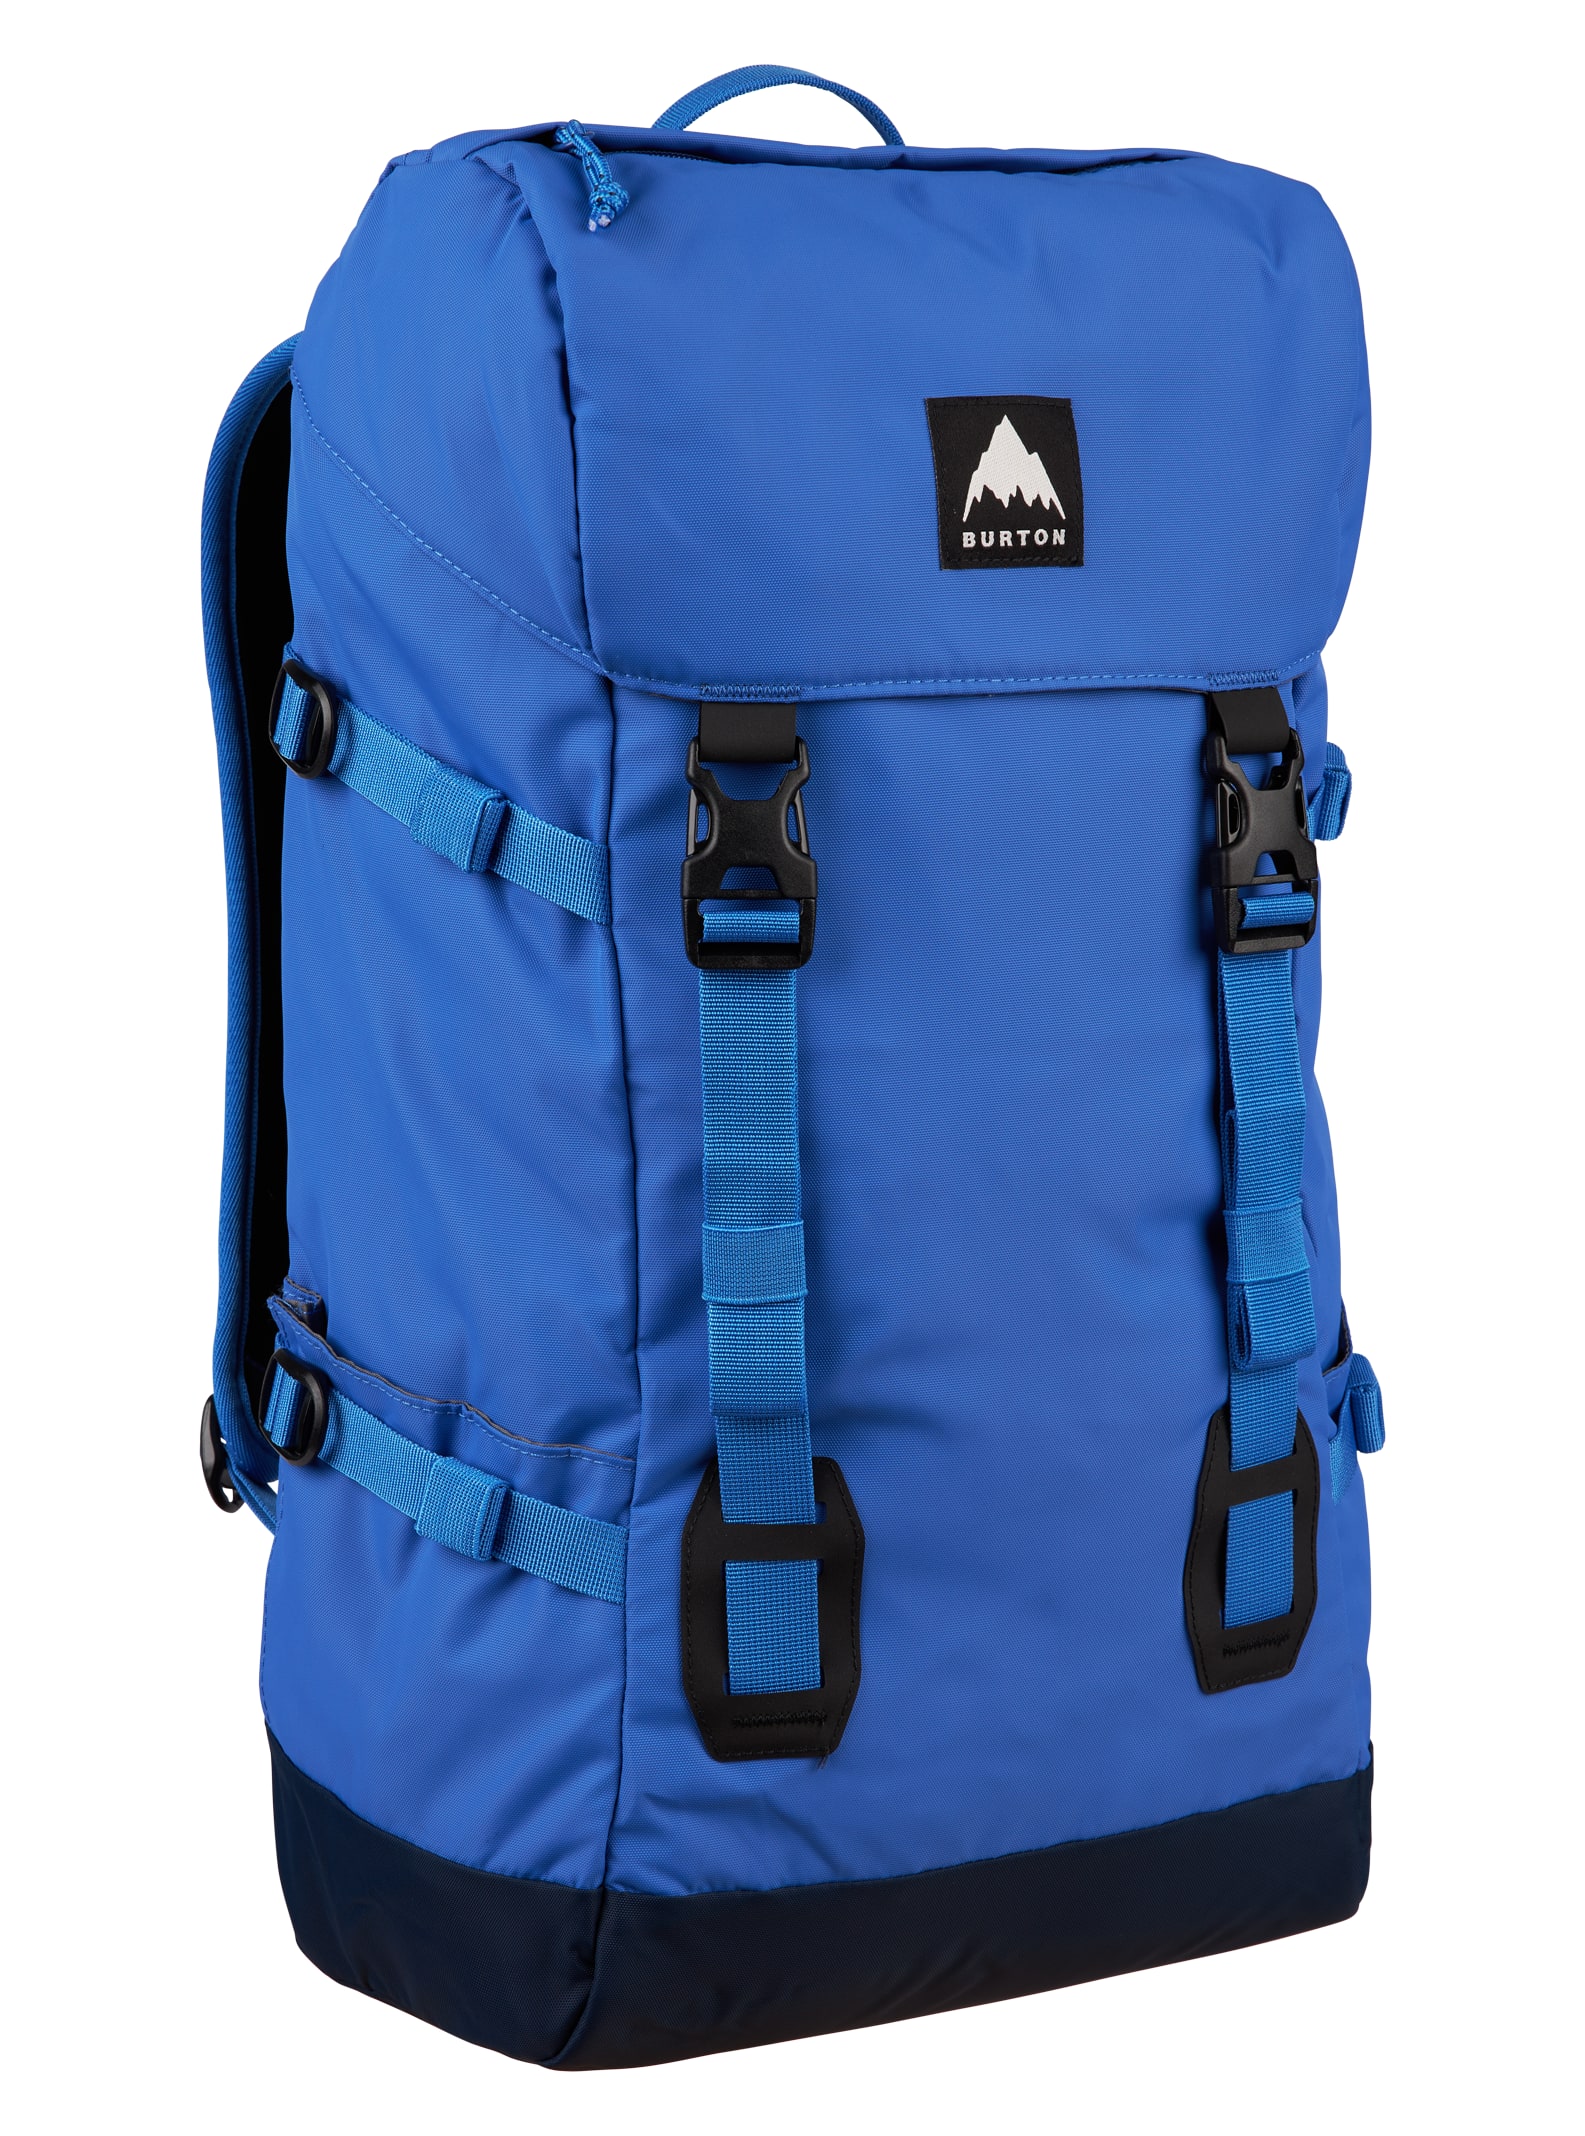 Backpacks | Burton Snowboards DK